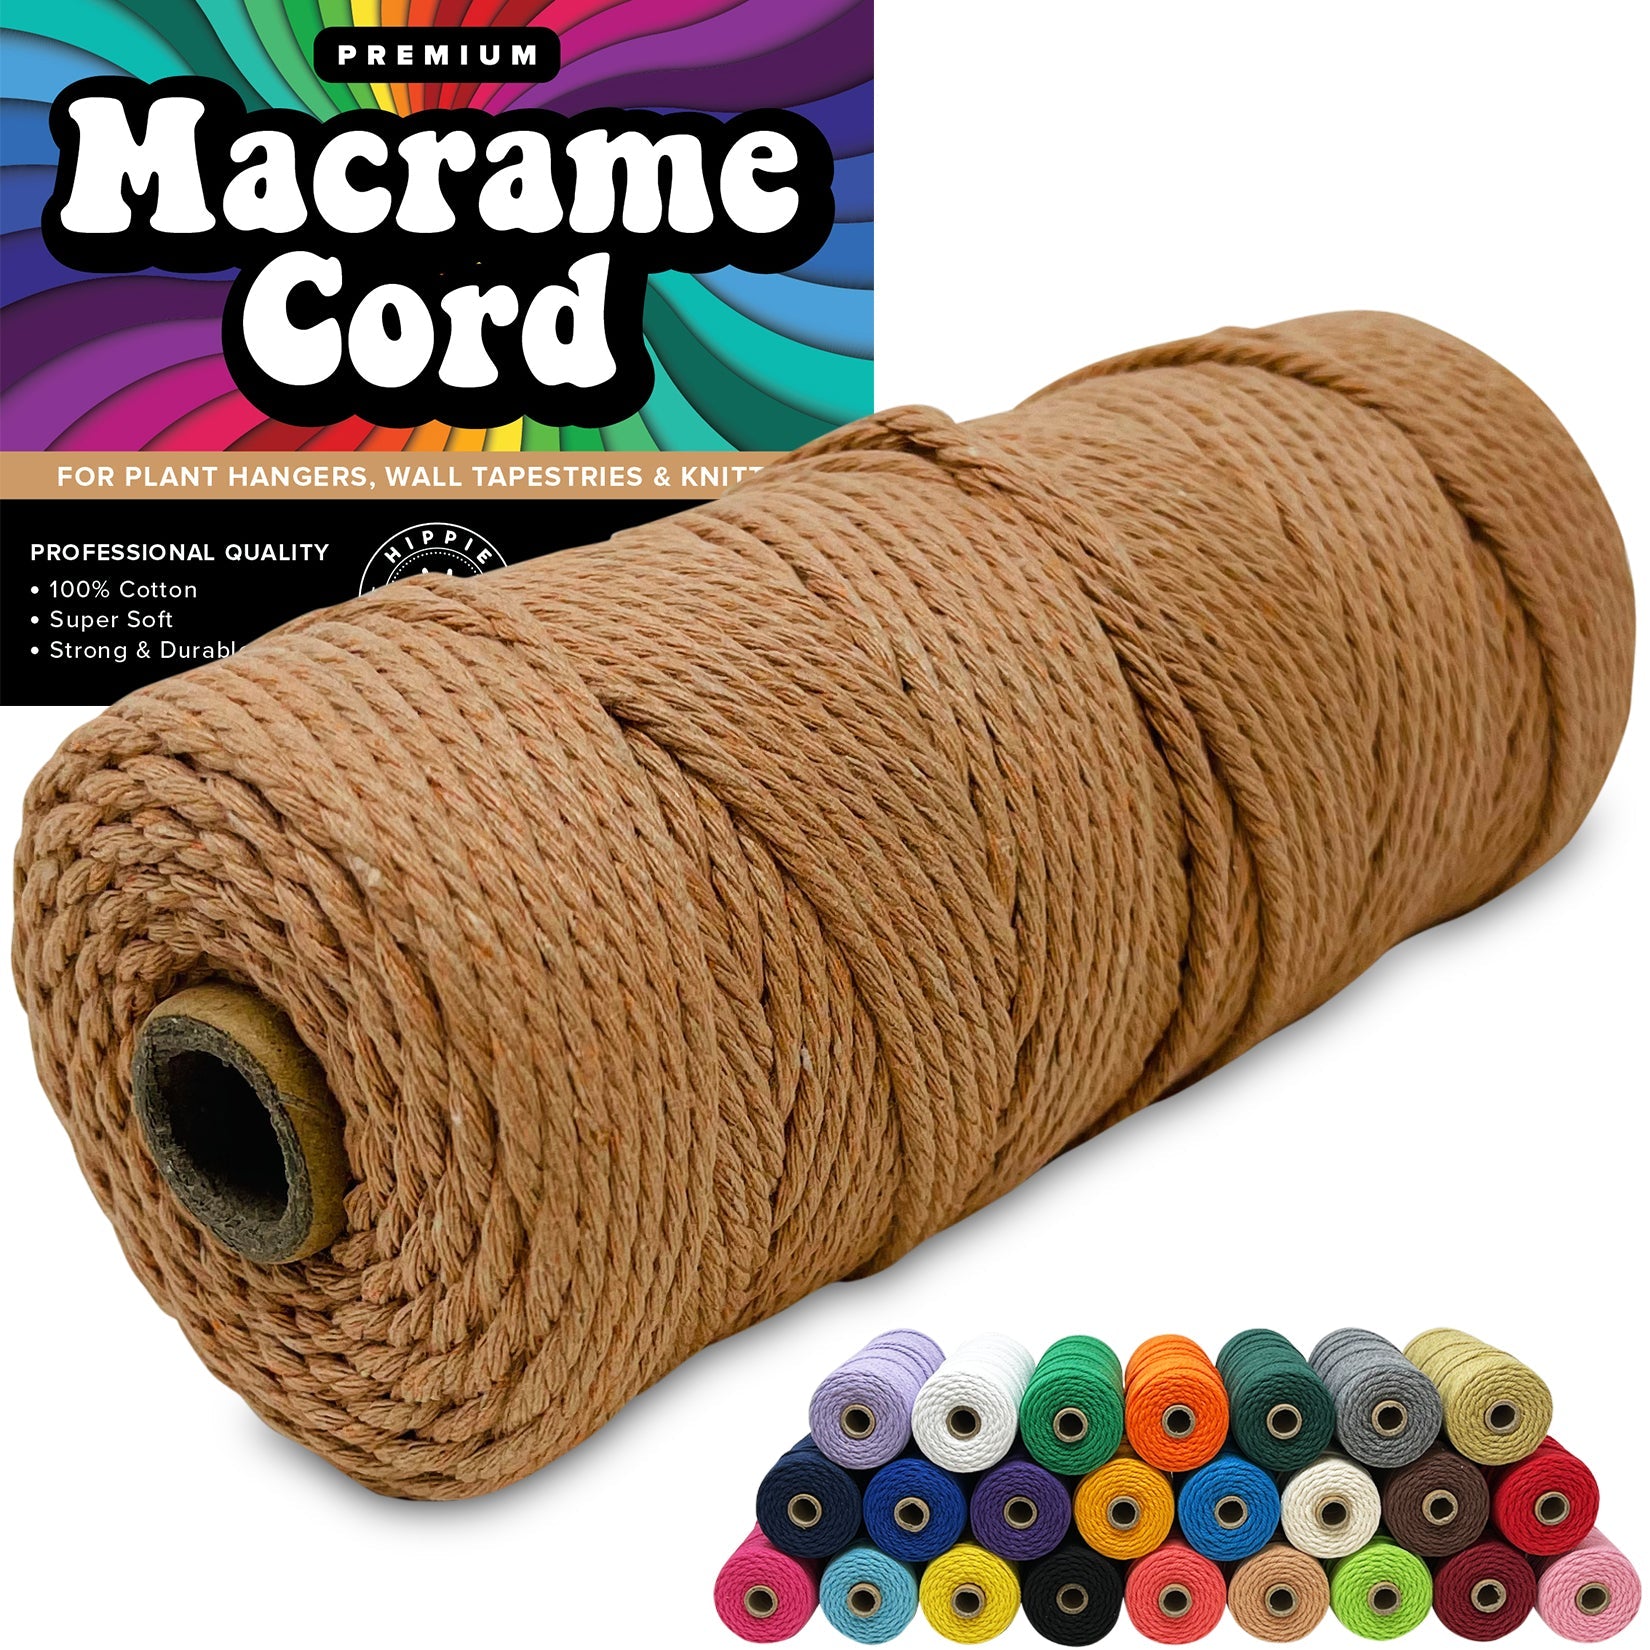  jijAcraft Macrame Cord,3mm x 328 Feet Cotton Macrame  Cord,Colored Cotton Cord Macrame Supplies,Macrame Rope Craft Twine String  for Macrame & Knitting,Plant Hangers,Wall Hanging,Craft (Black) : Tools &  Home Improvement